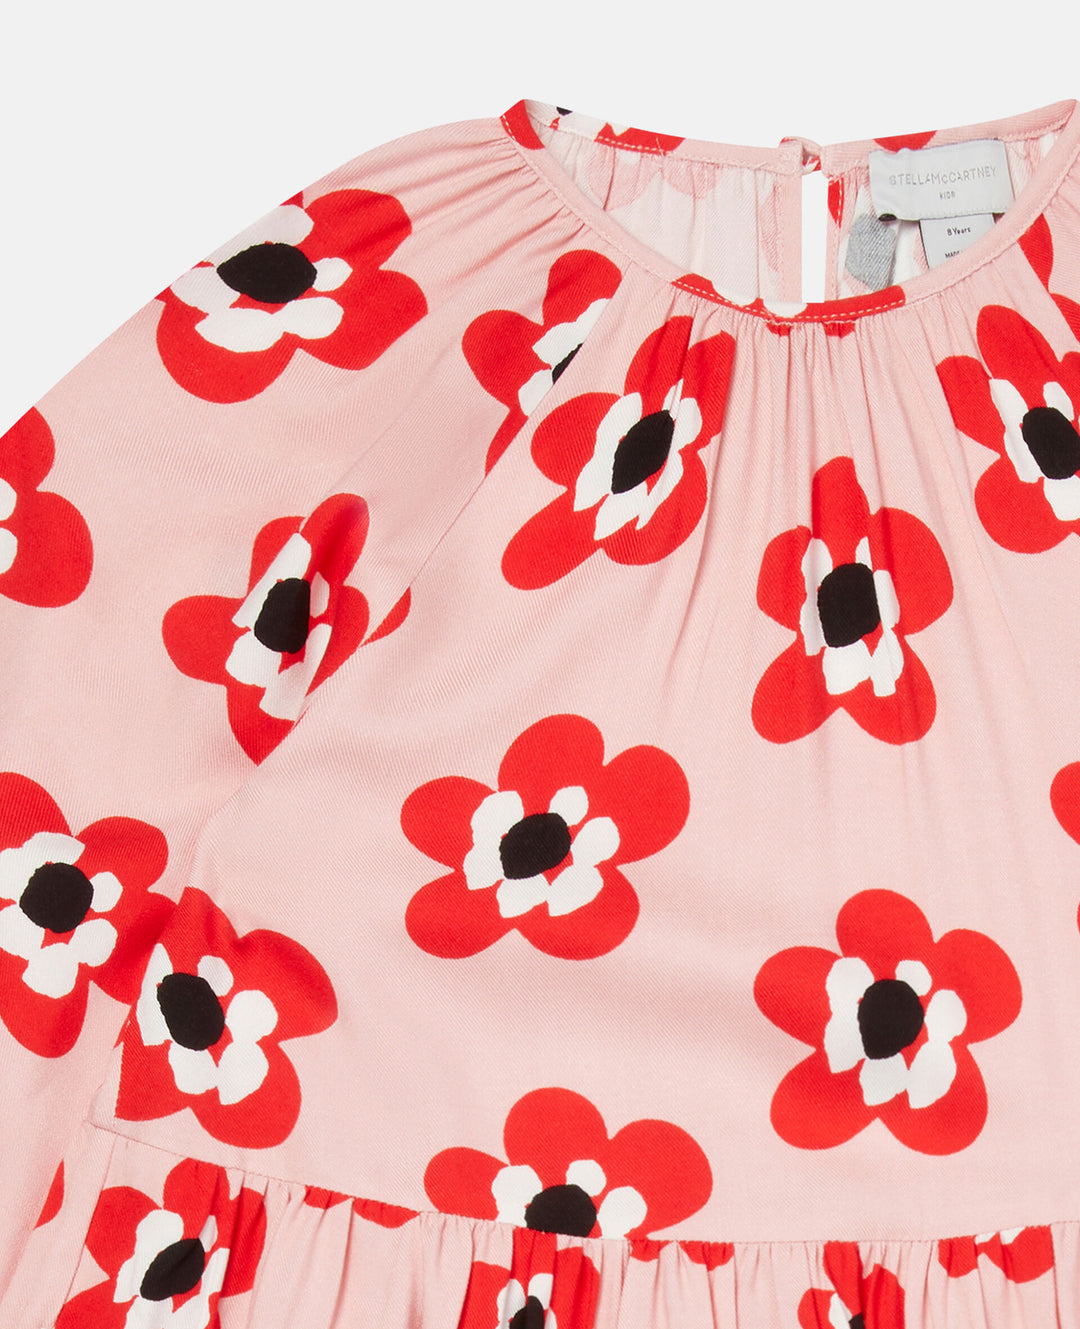 Stella McCartney Kids pink graphic flower print dress Second Season diff. sizes 2